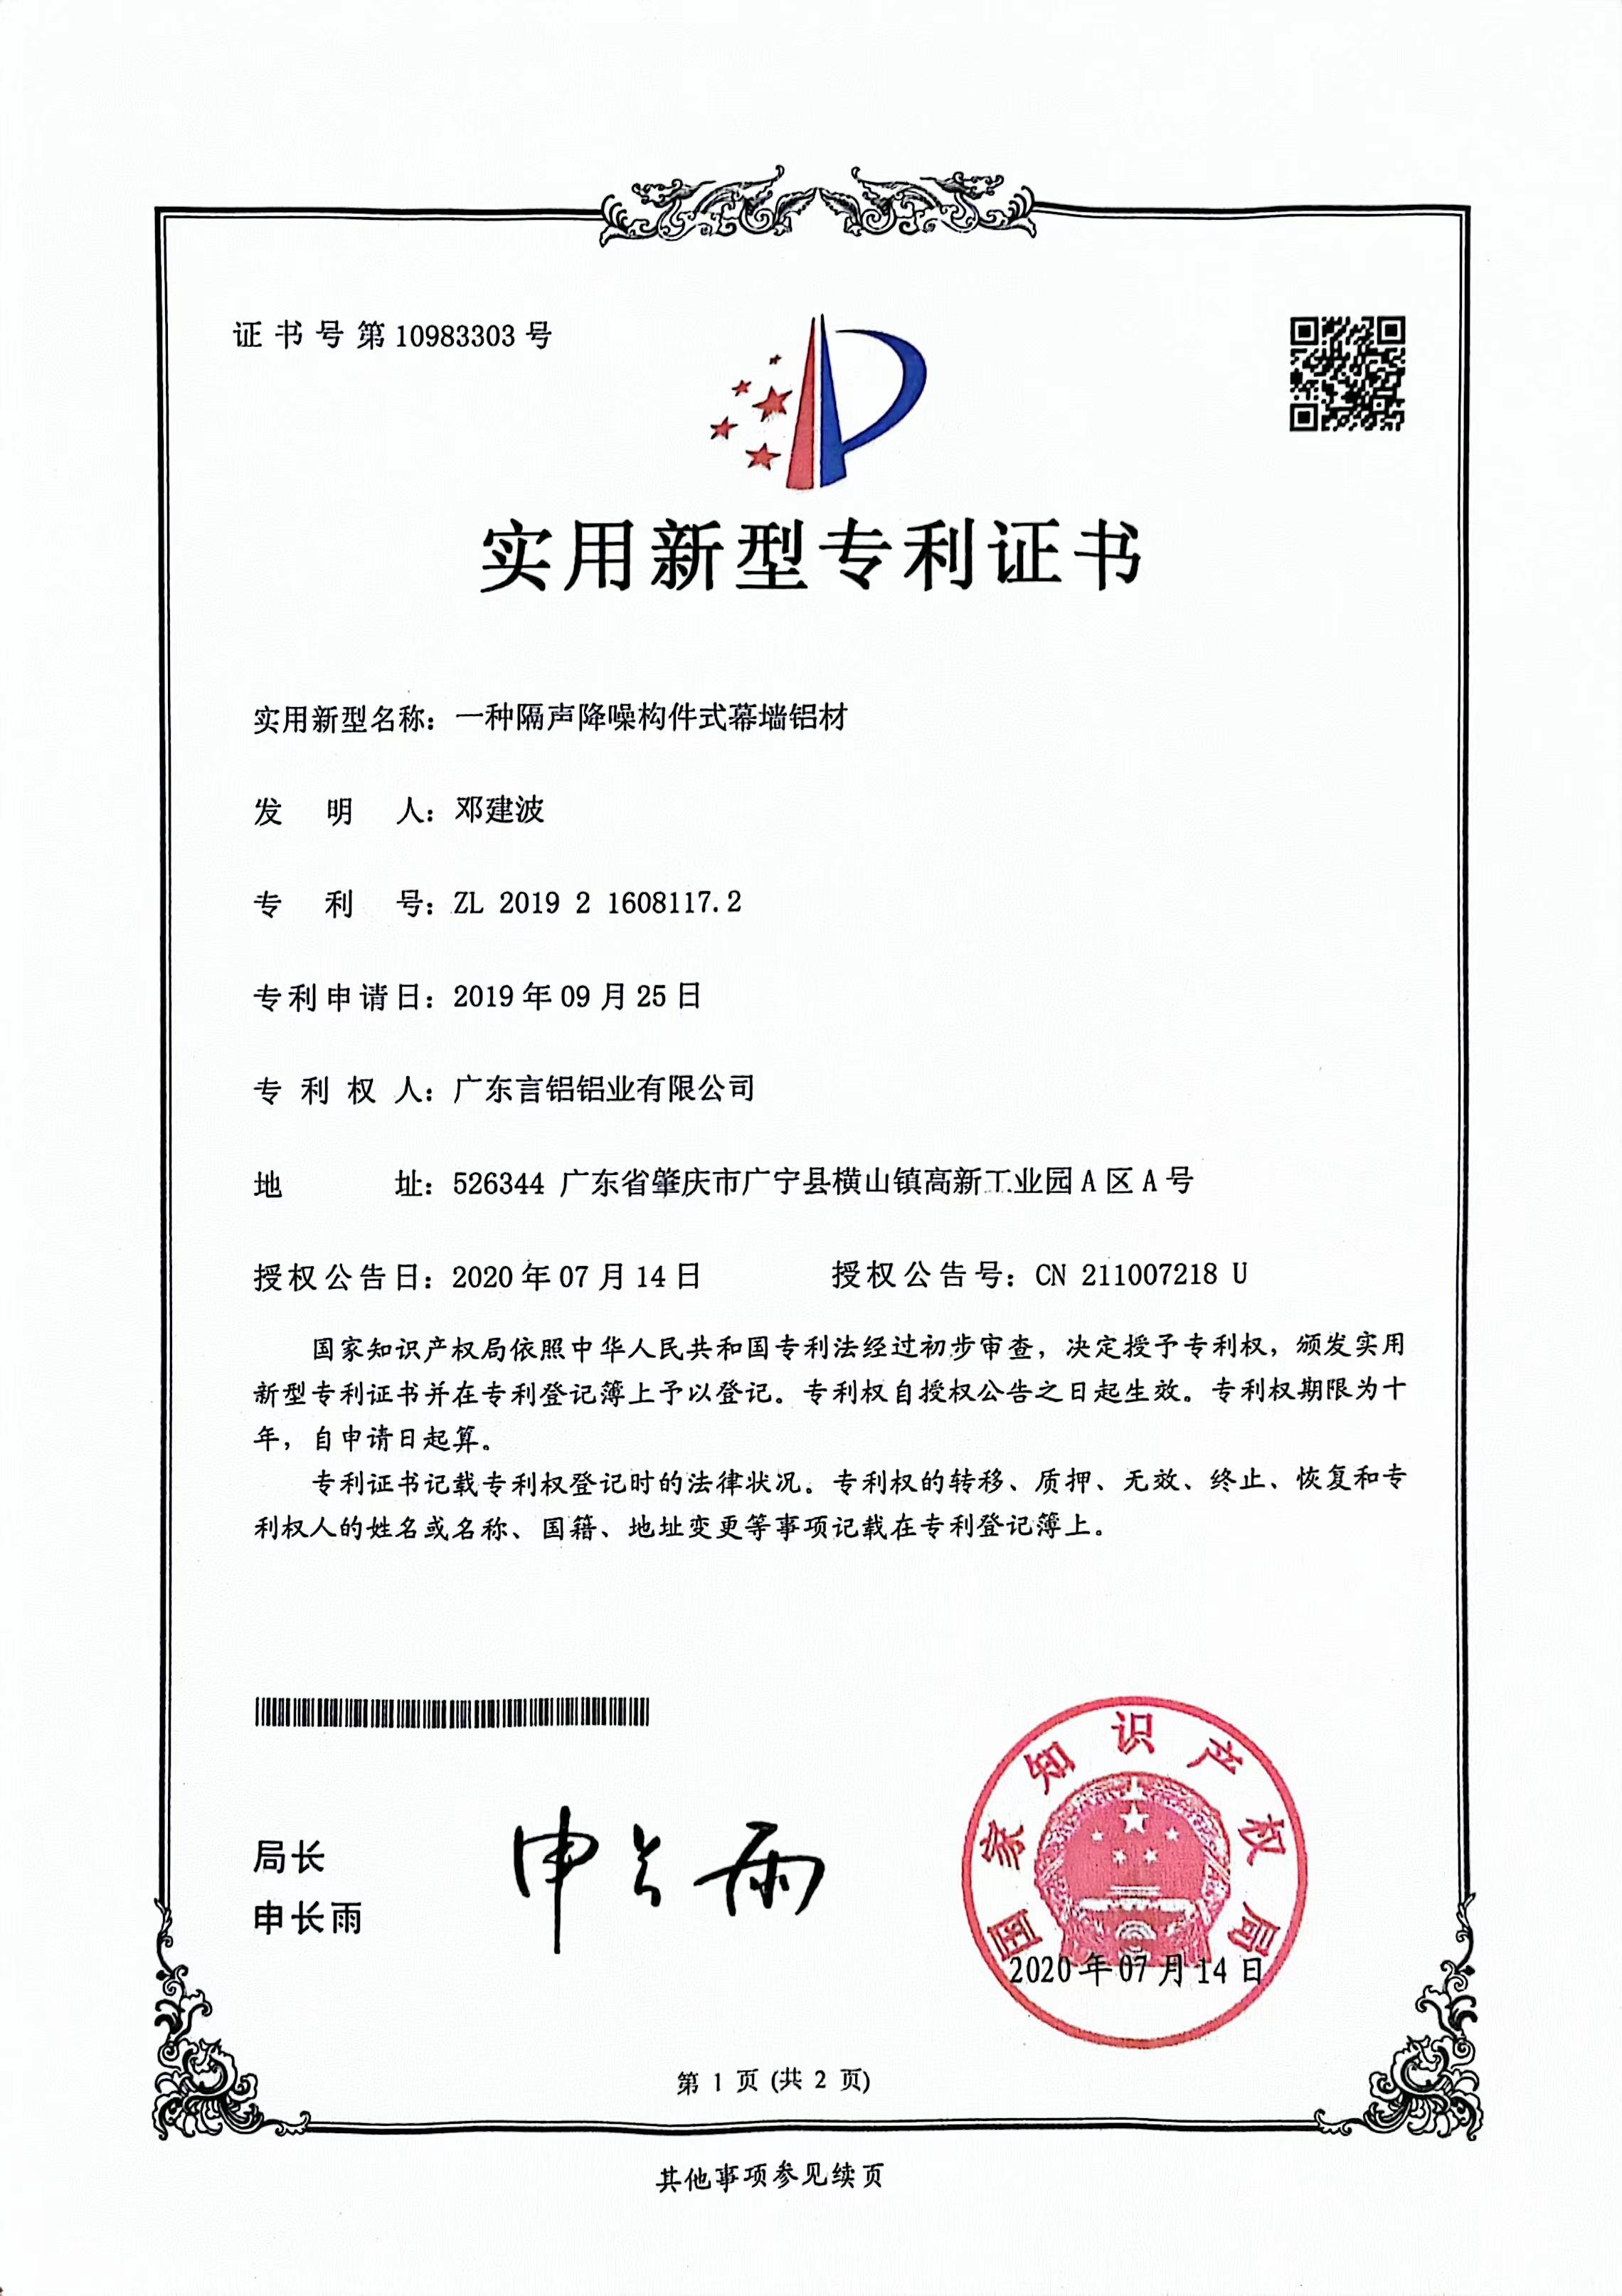 Patent certificate 3.jpg